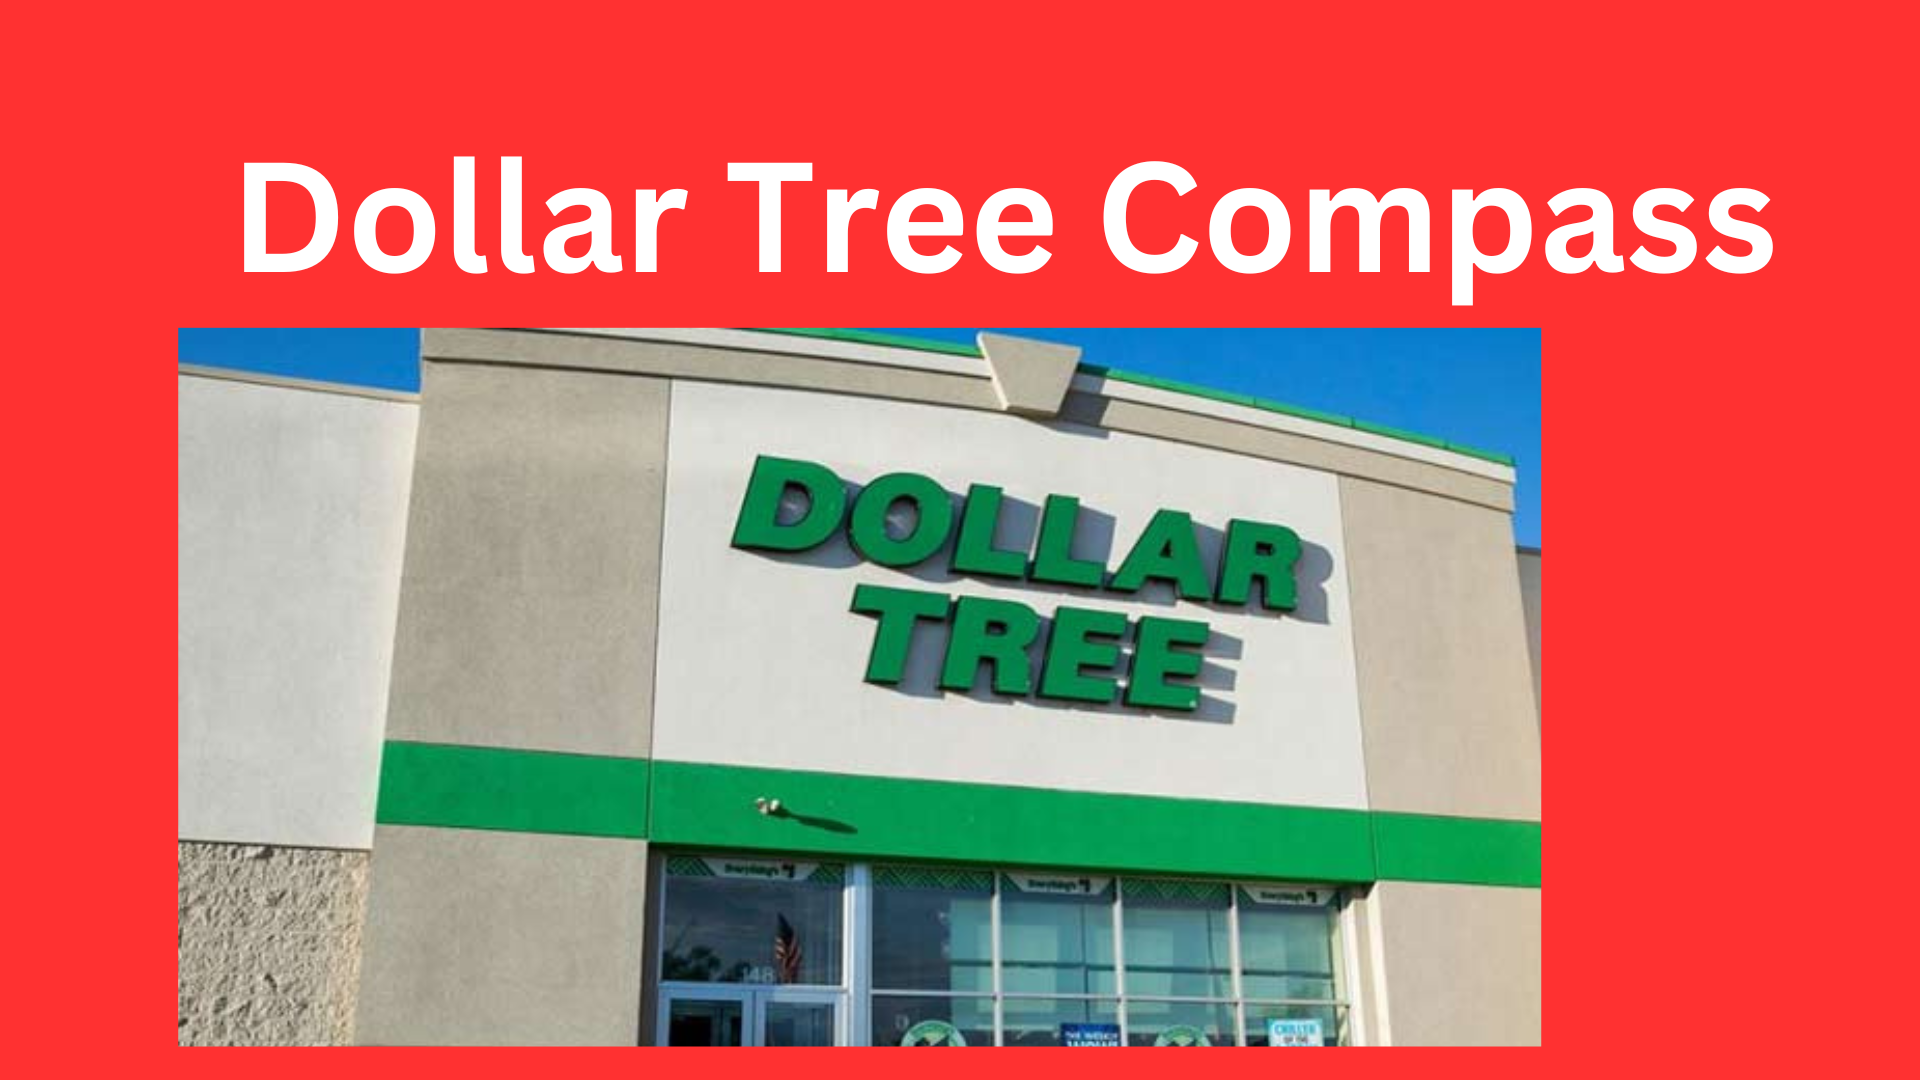 Dollar Tree Compass